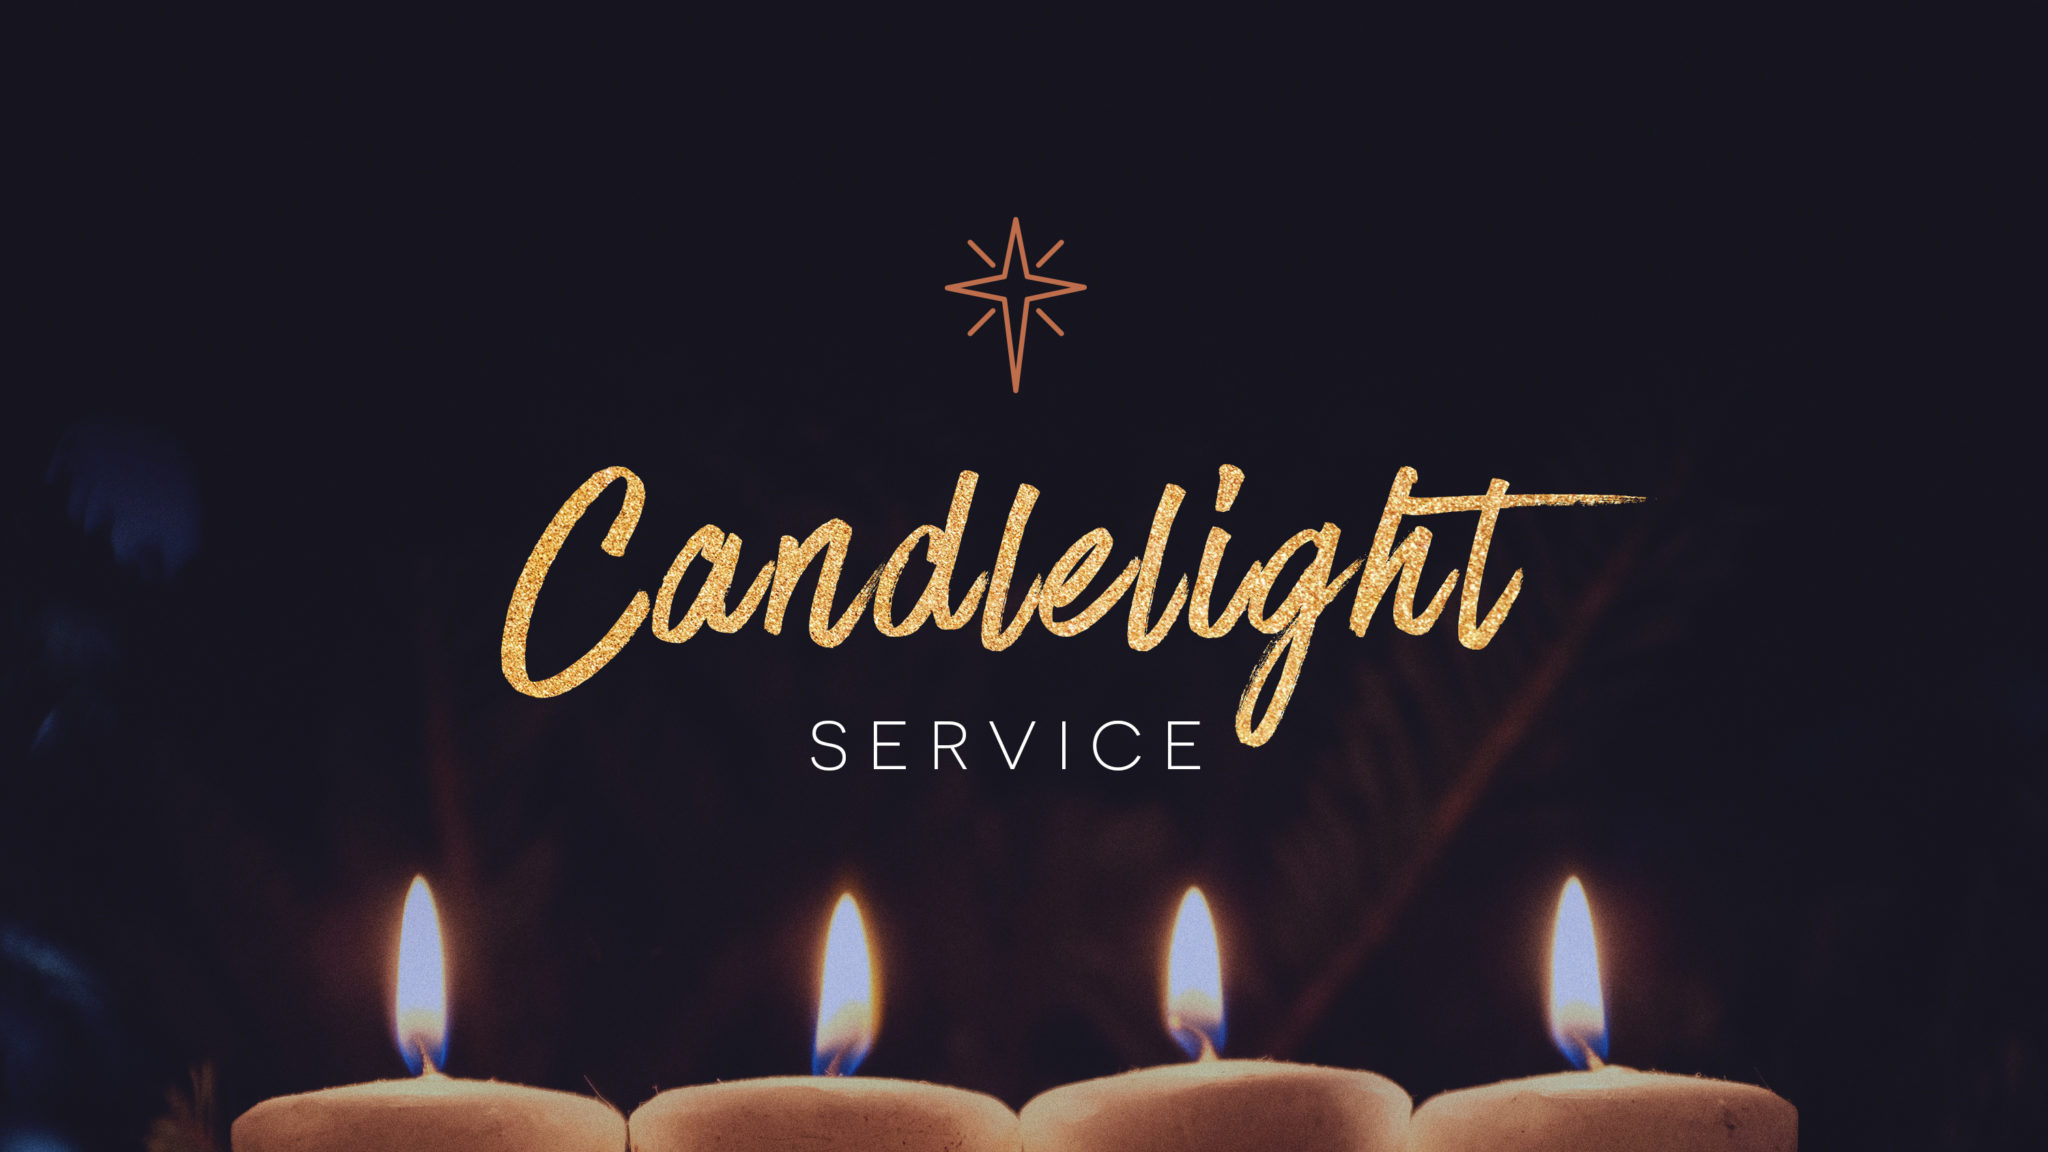 Dec 22 Candlelight Service maranatha cambridge